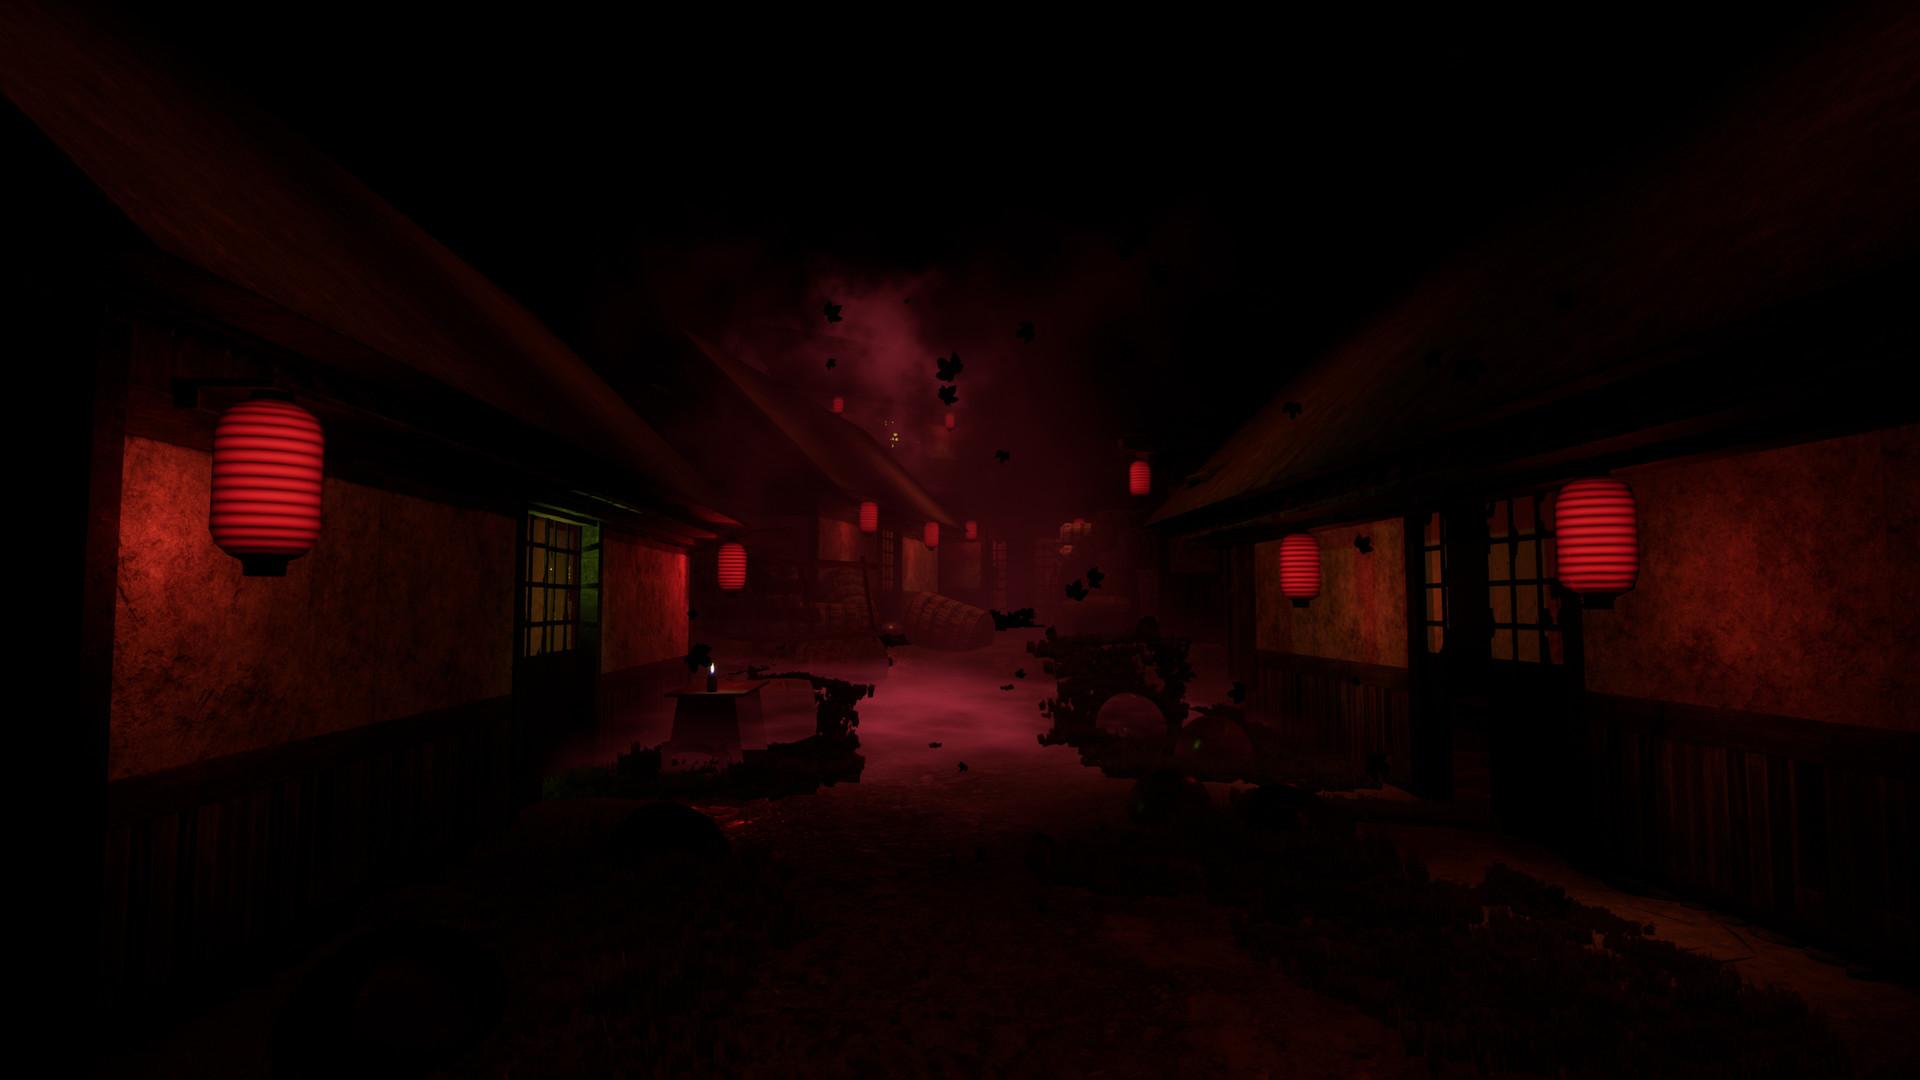 Screenshot №11 from game Malice